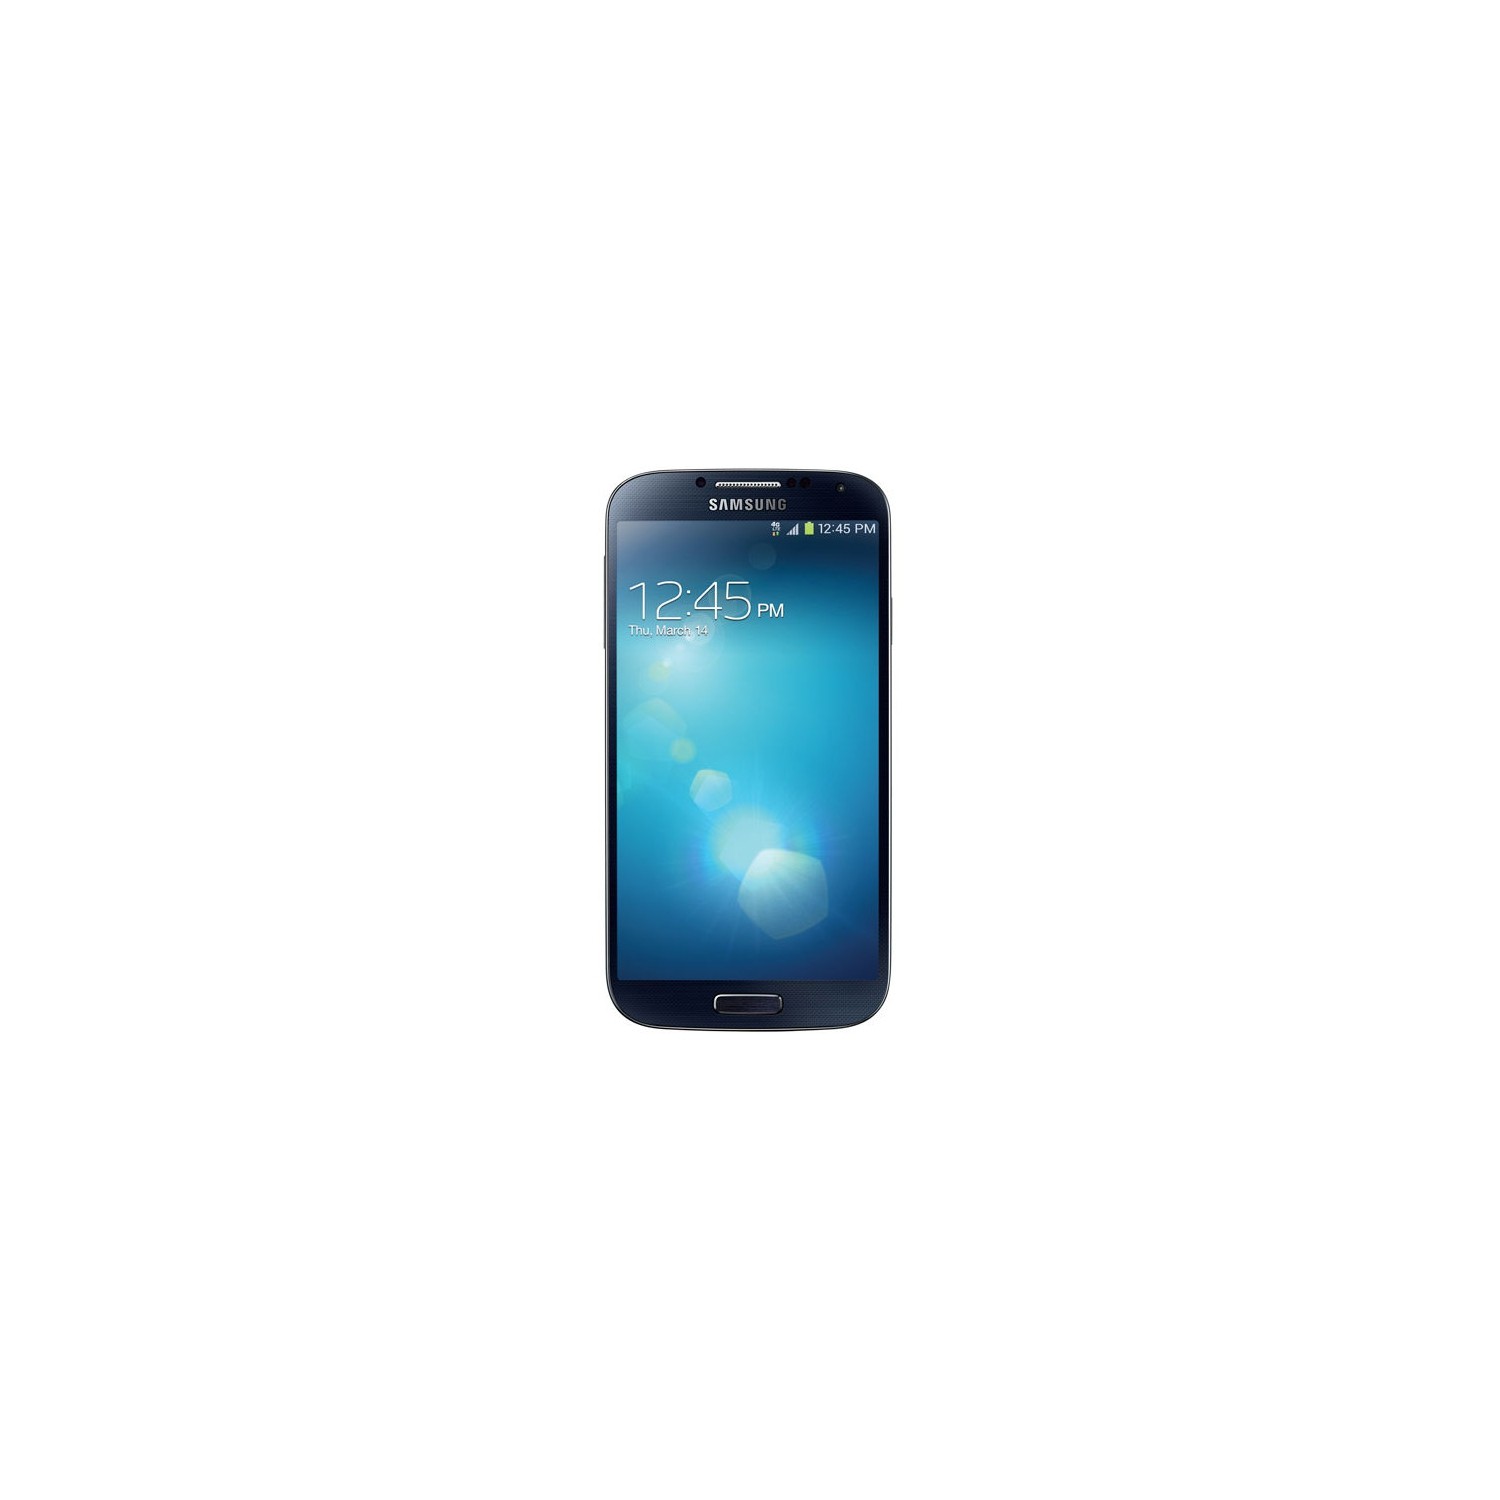 Refurbished (Excellent) - Samsung Galaxy S4 16gb GSM Unlocked Cellphone in Black Mist